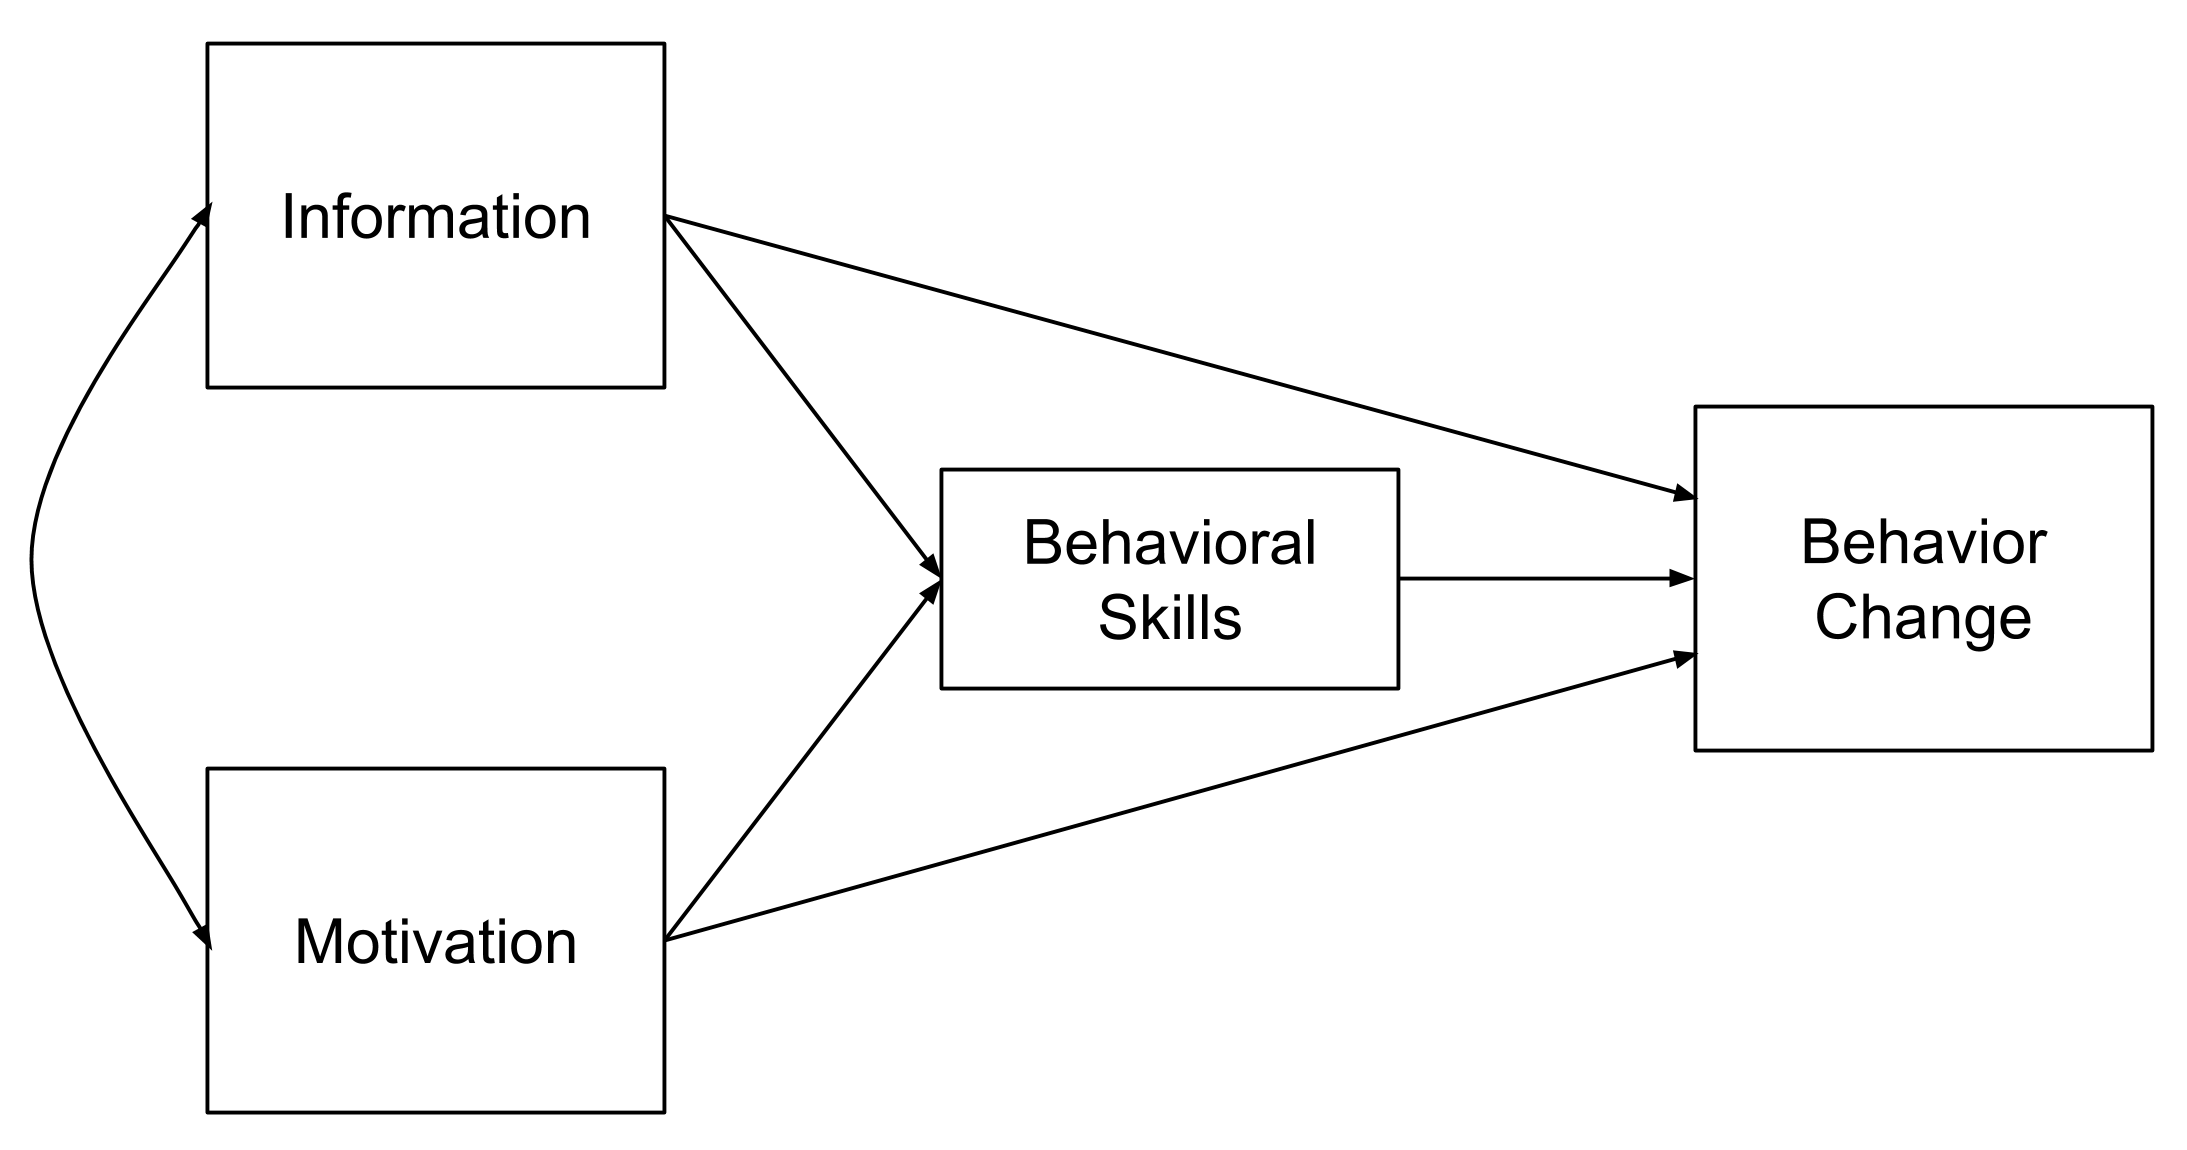 Information-motivation-behavioral skills model